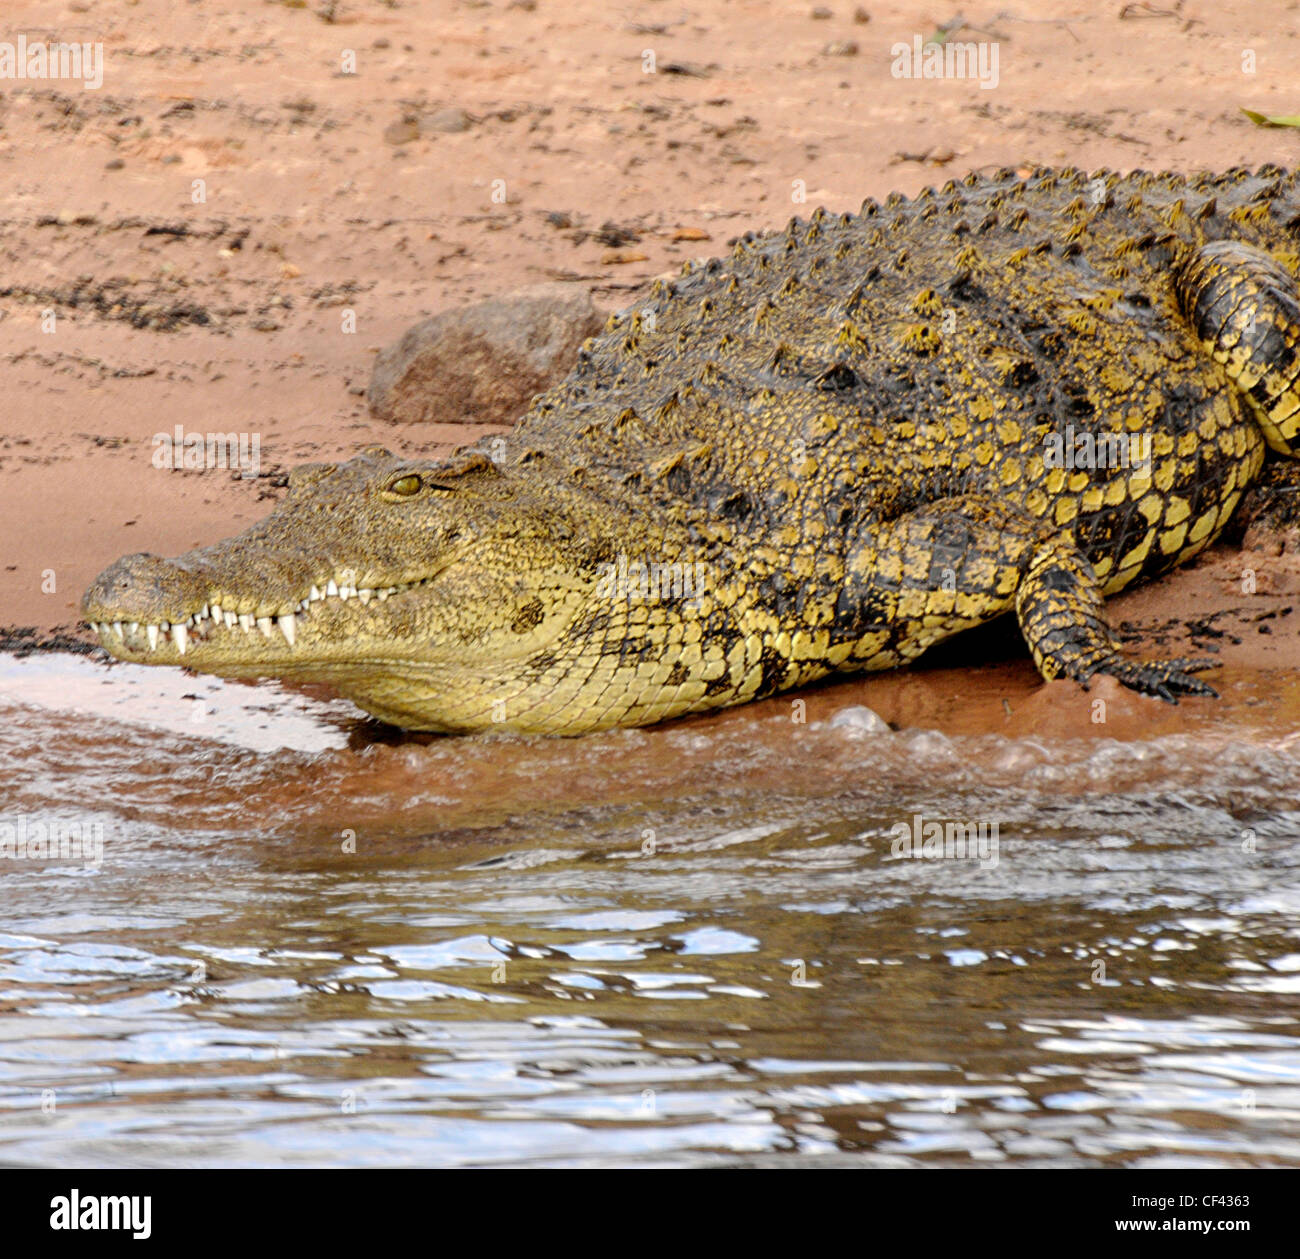 Okavango River crocodile. Stock Photo